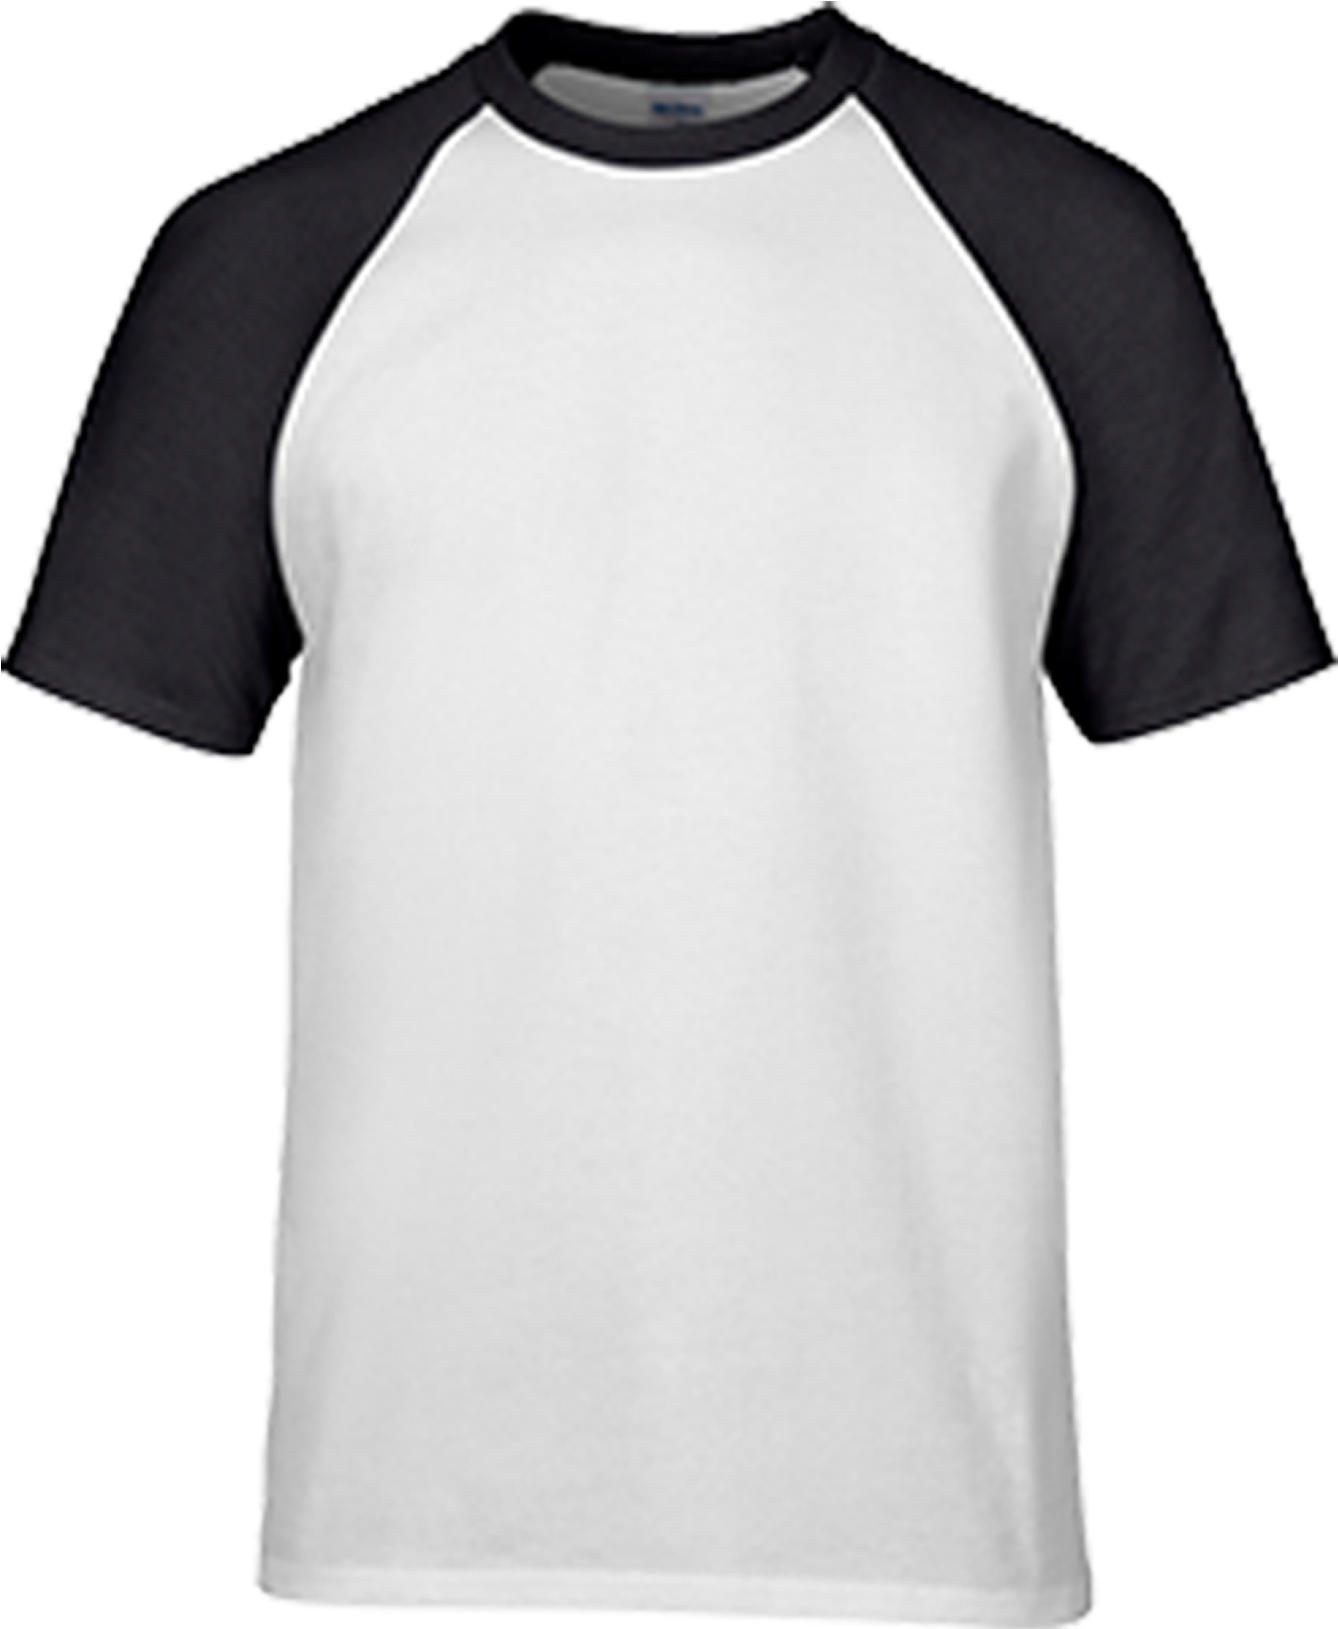 Blackand White Raglan T Shirt